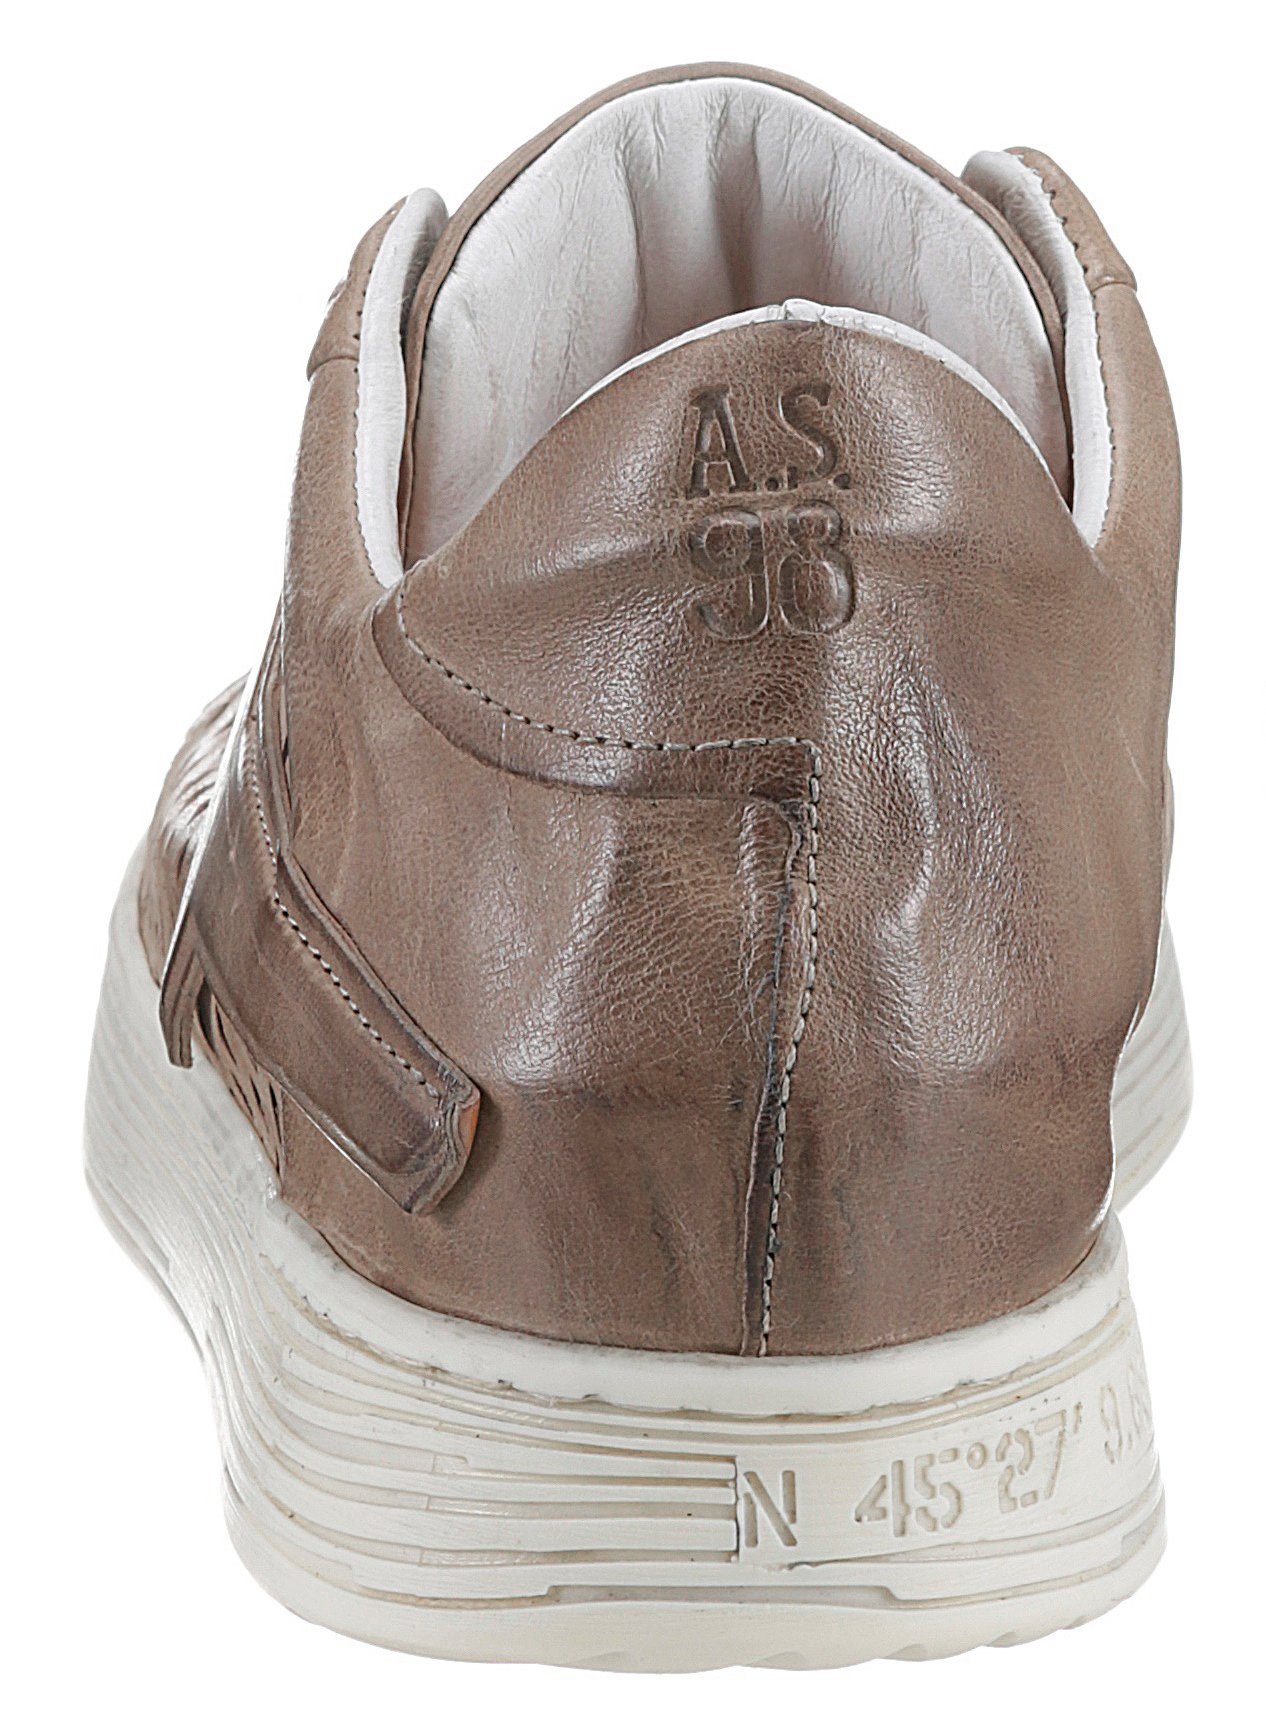 Sneaker ASZEPPA Lochmuster braun-weiß used mit A.S.98